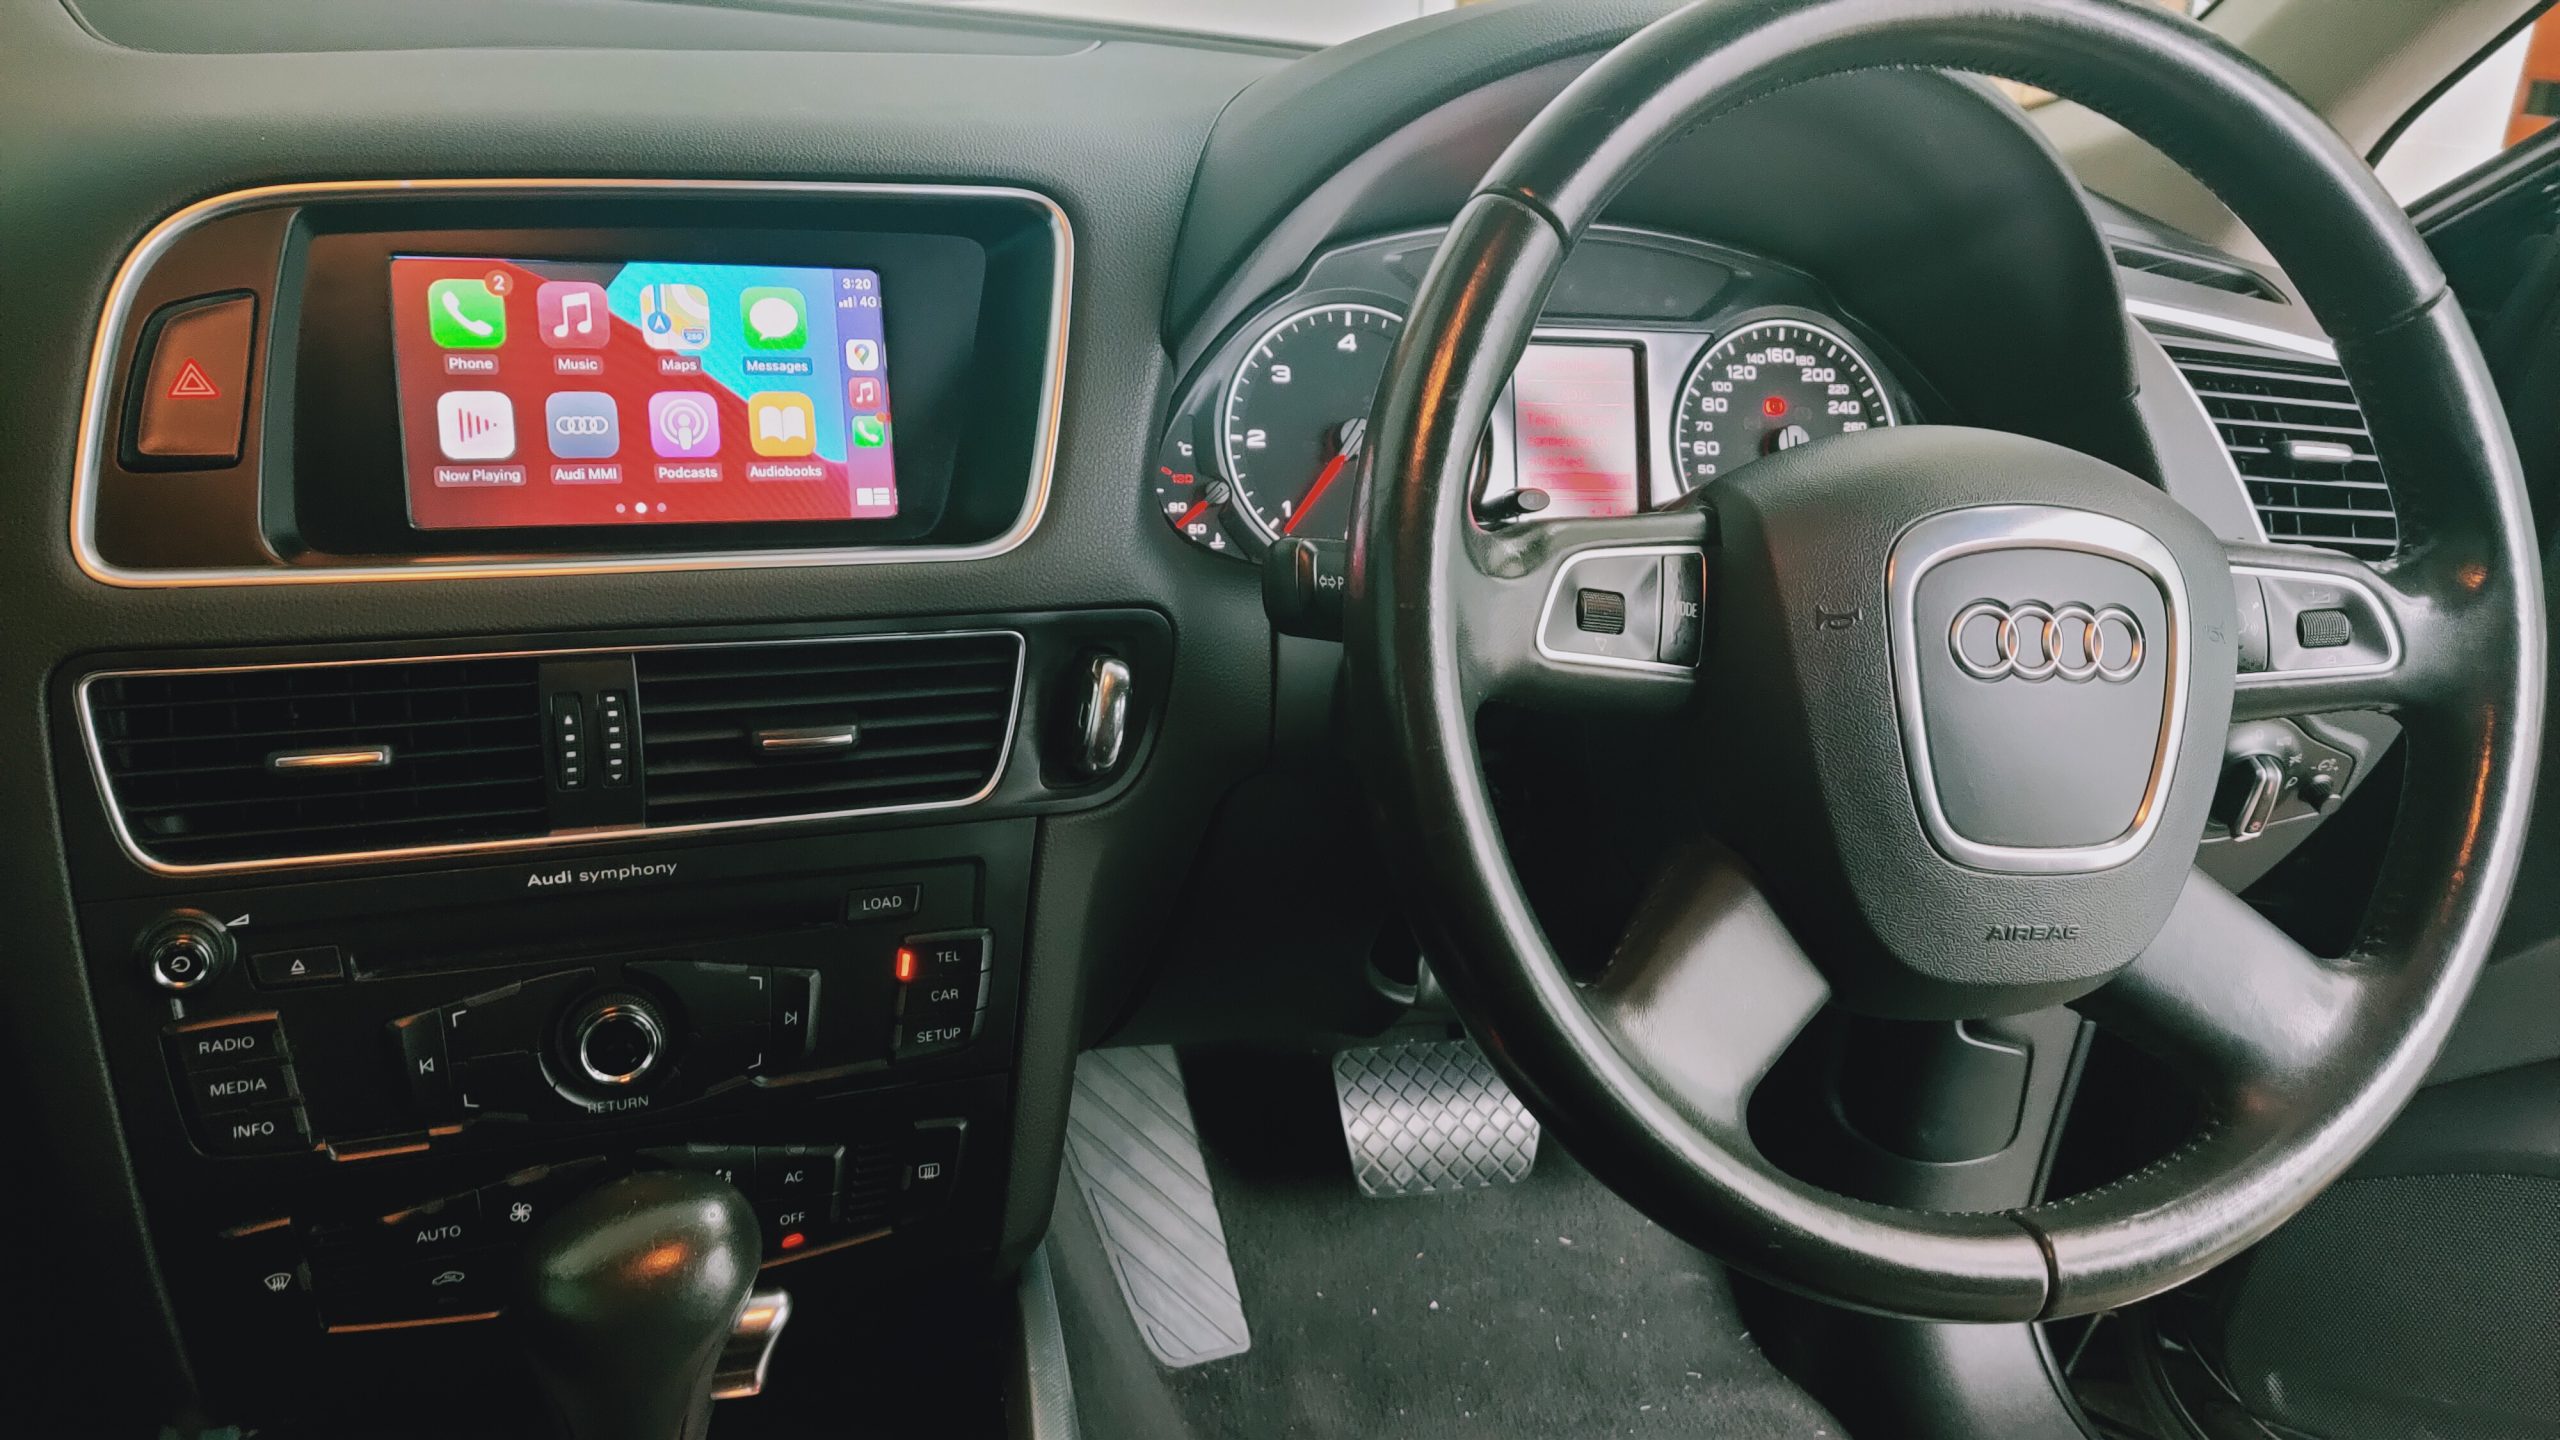 Audi Q5 Symphony Android Auto and wireless Apple CarPlay